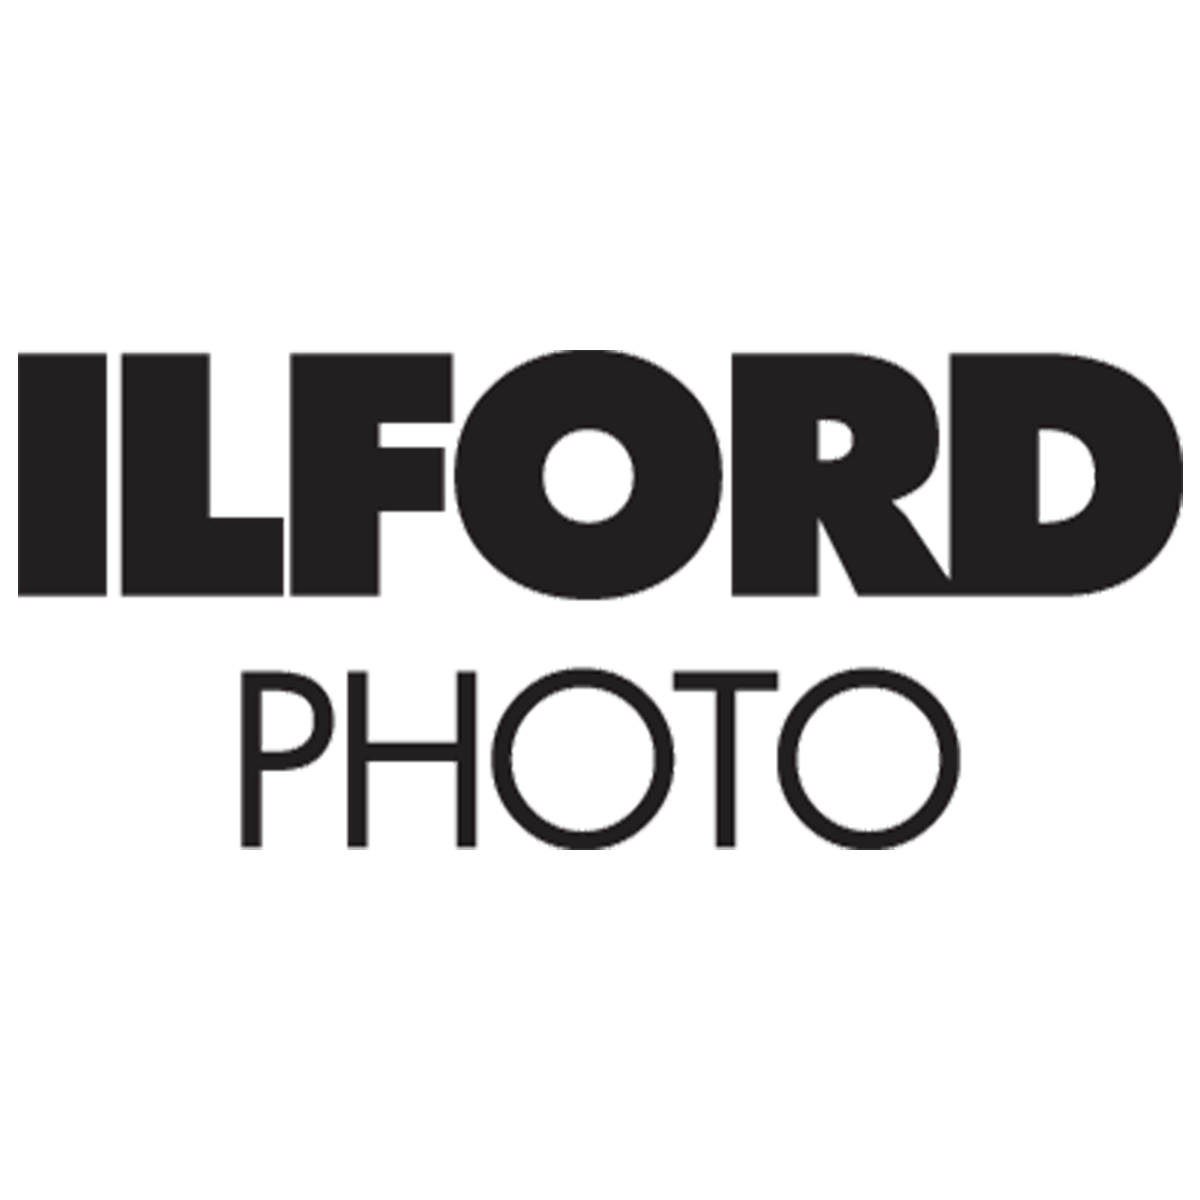 Ilford Film